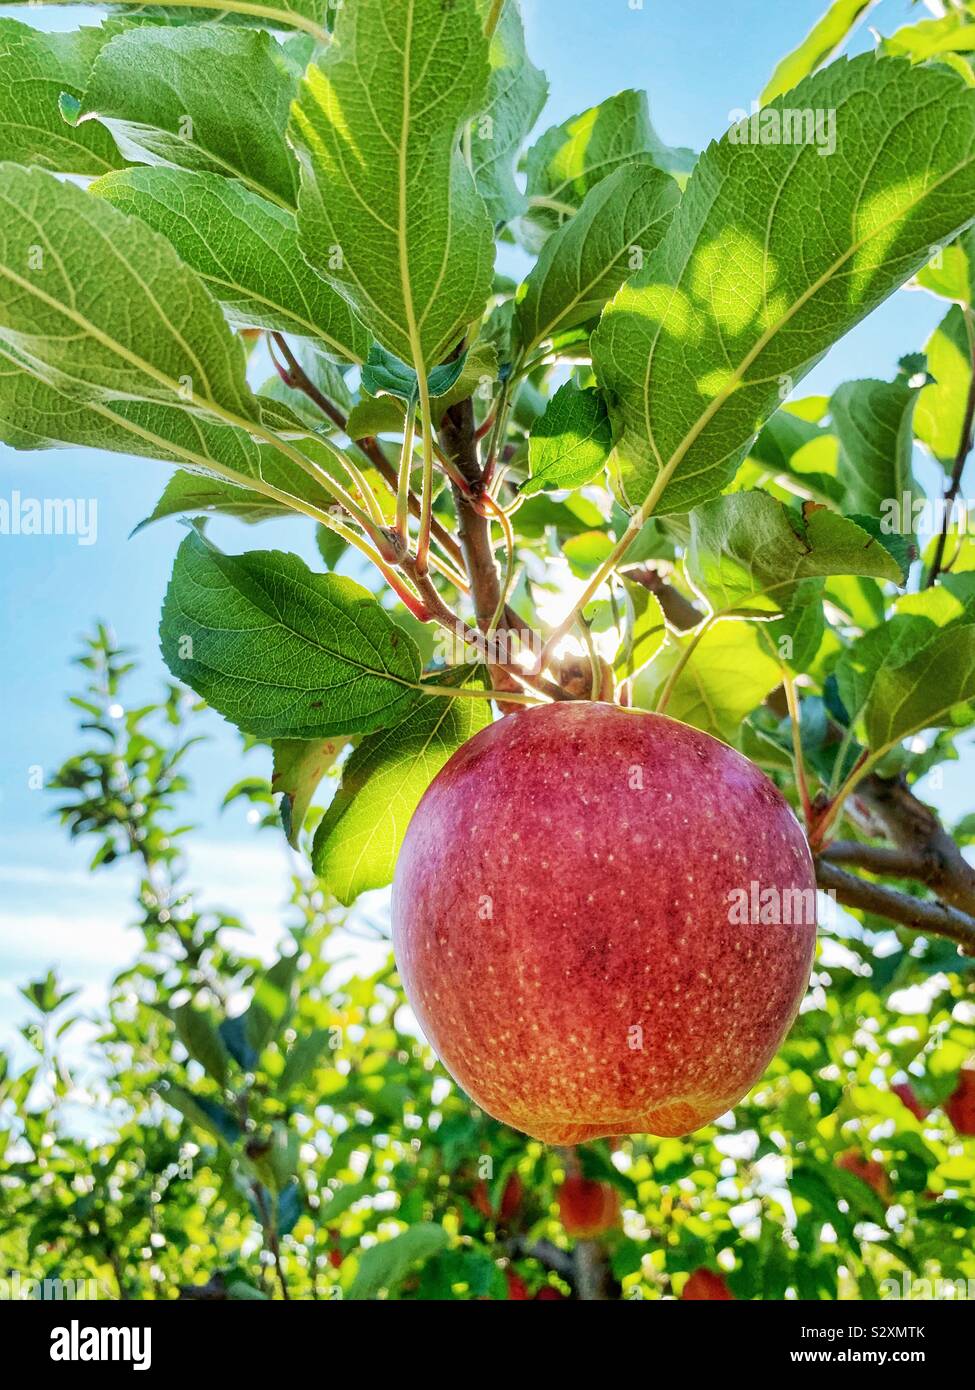 Macoun apples on a tree Stock Photo